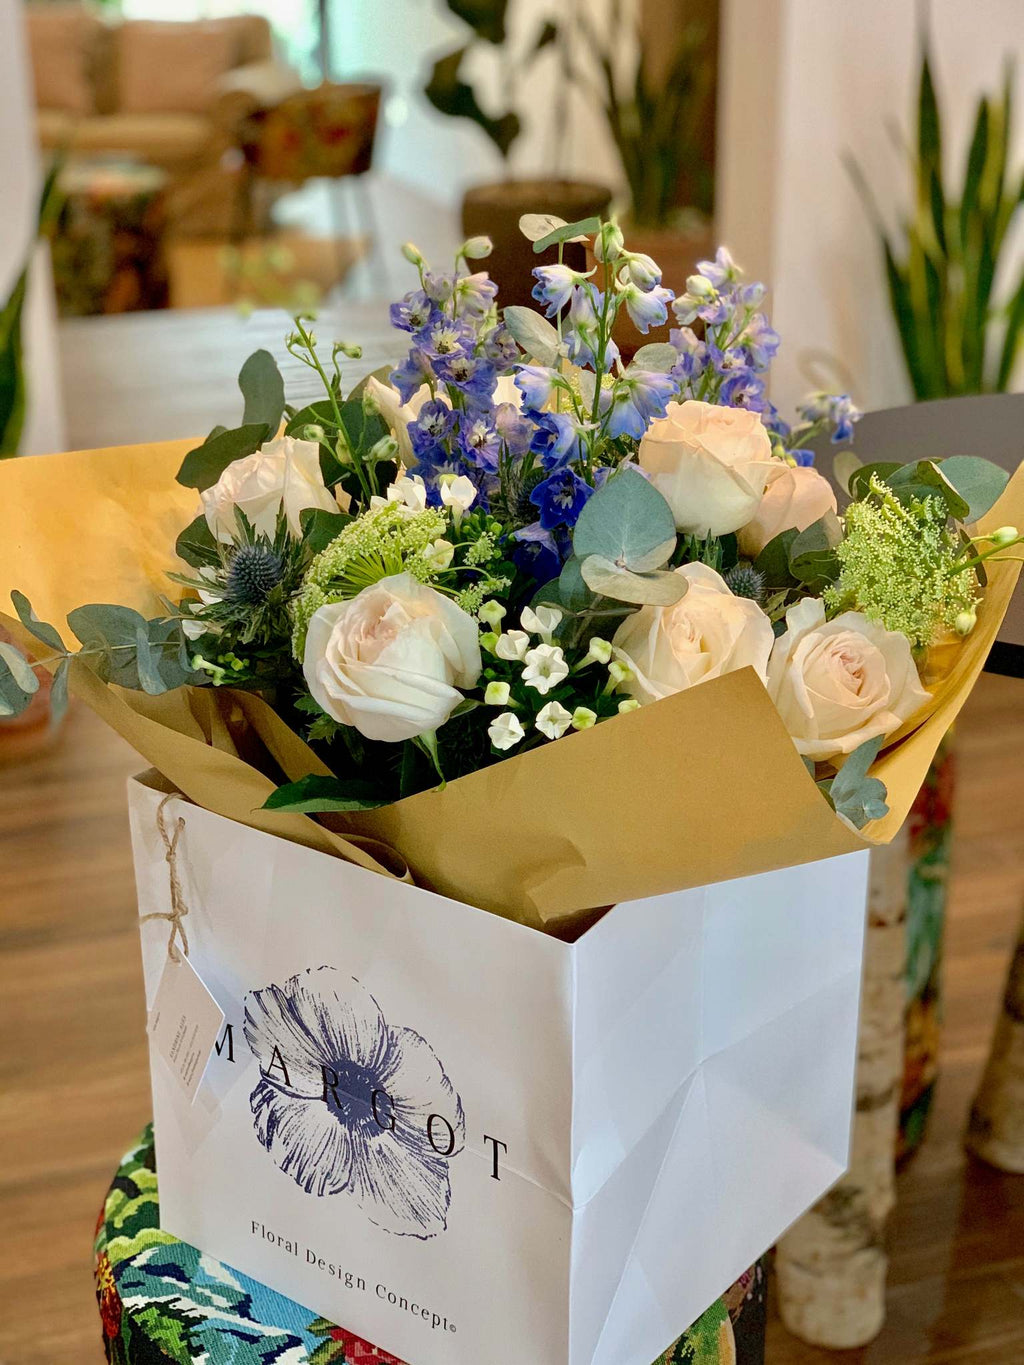 Margot bouquet by Margot Floral Design. A fresh flower bouquet composed of White O'Hara Garden Roses, Blue Delphinium, White Bouvardia, Ammi, and Eucalyptus.